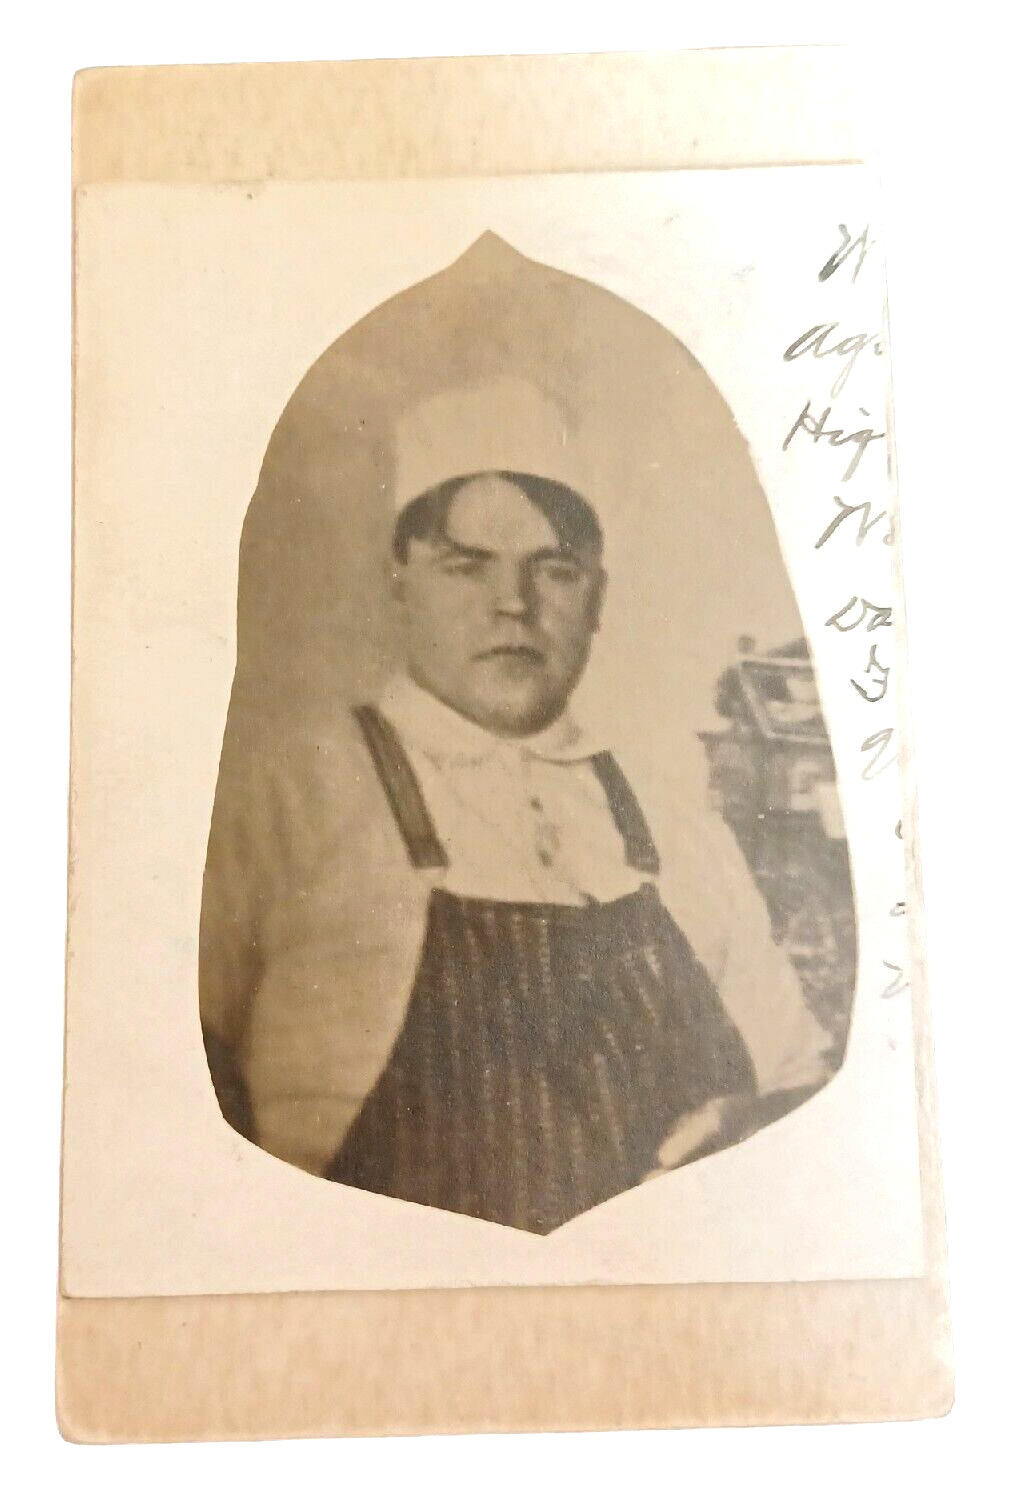 1800s Sheriffs Office Identification Card Bonner County ID Walter Thompkins R12